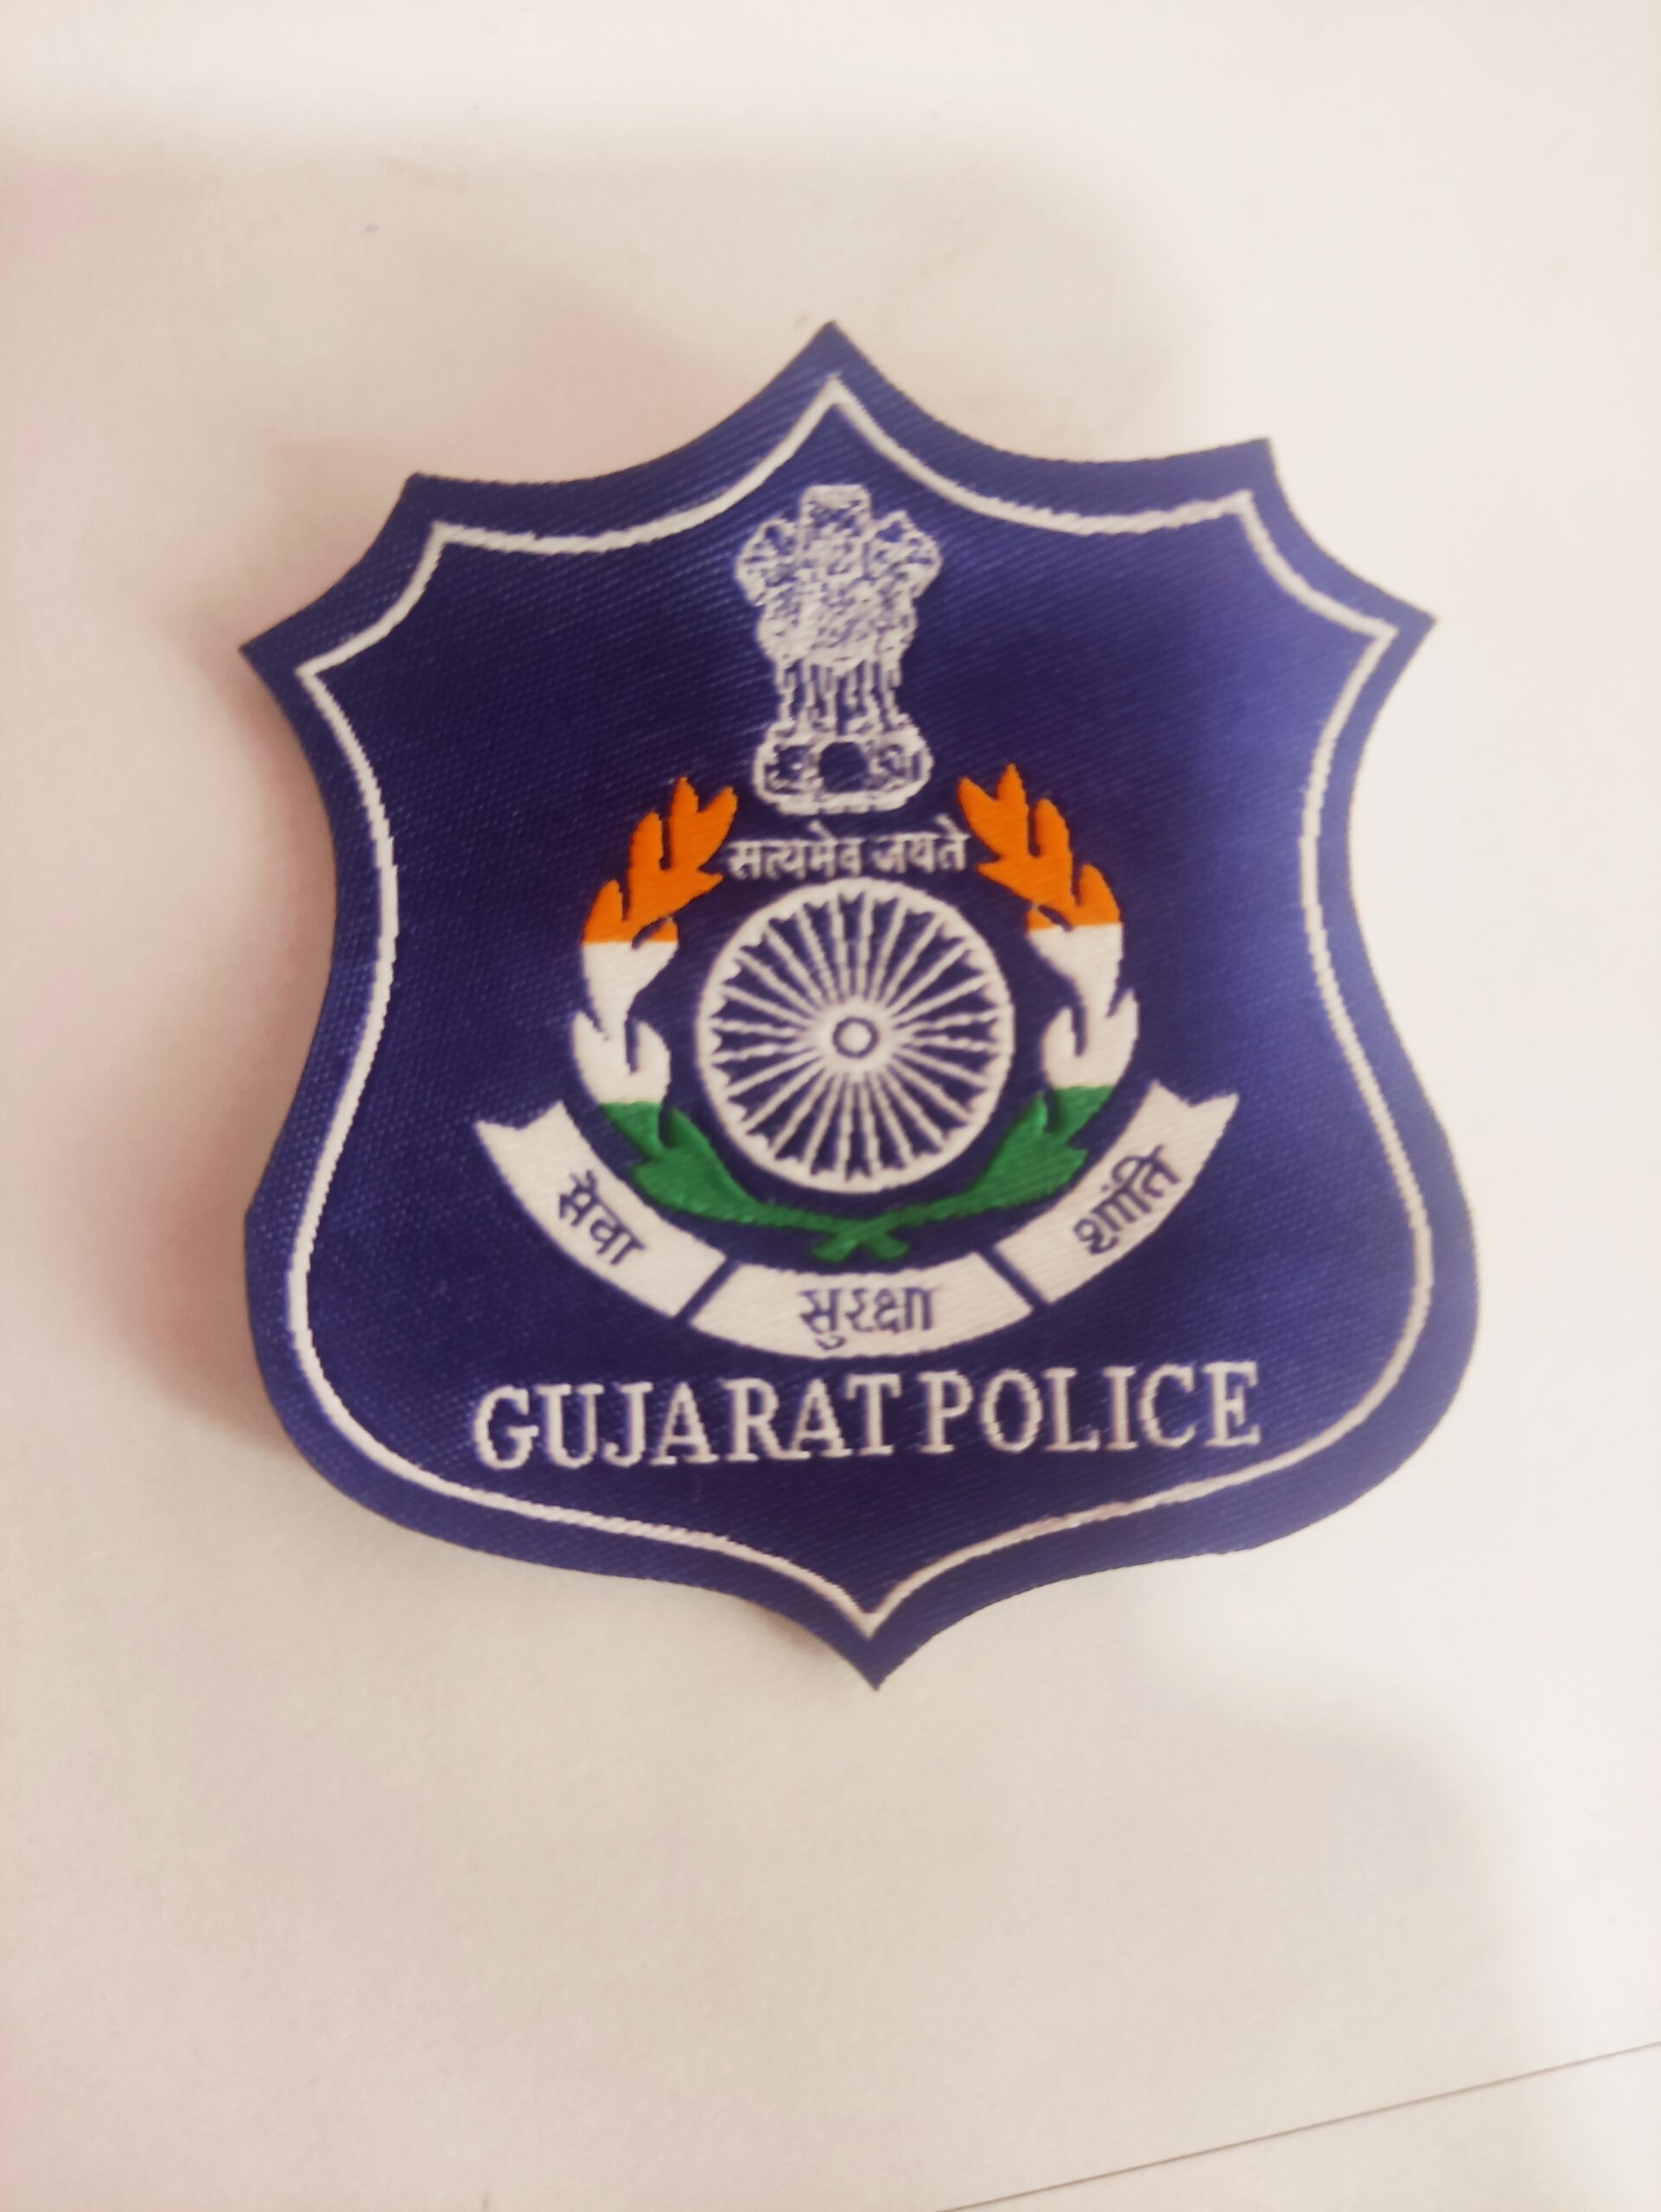 GOA Police Recruitment 2016 for 181 SI, Constable, Clerk & other posts -  Latest Govt Jobs in Gujarat & India | Free Govt Job Alert 2022 | OJAS Jobs